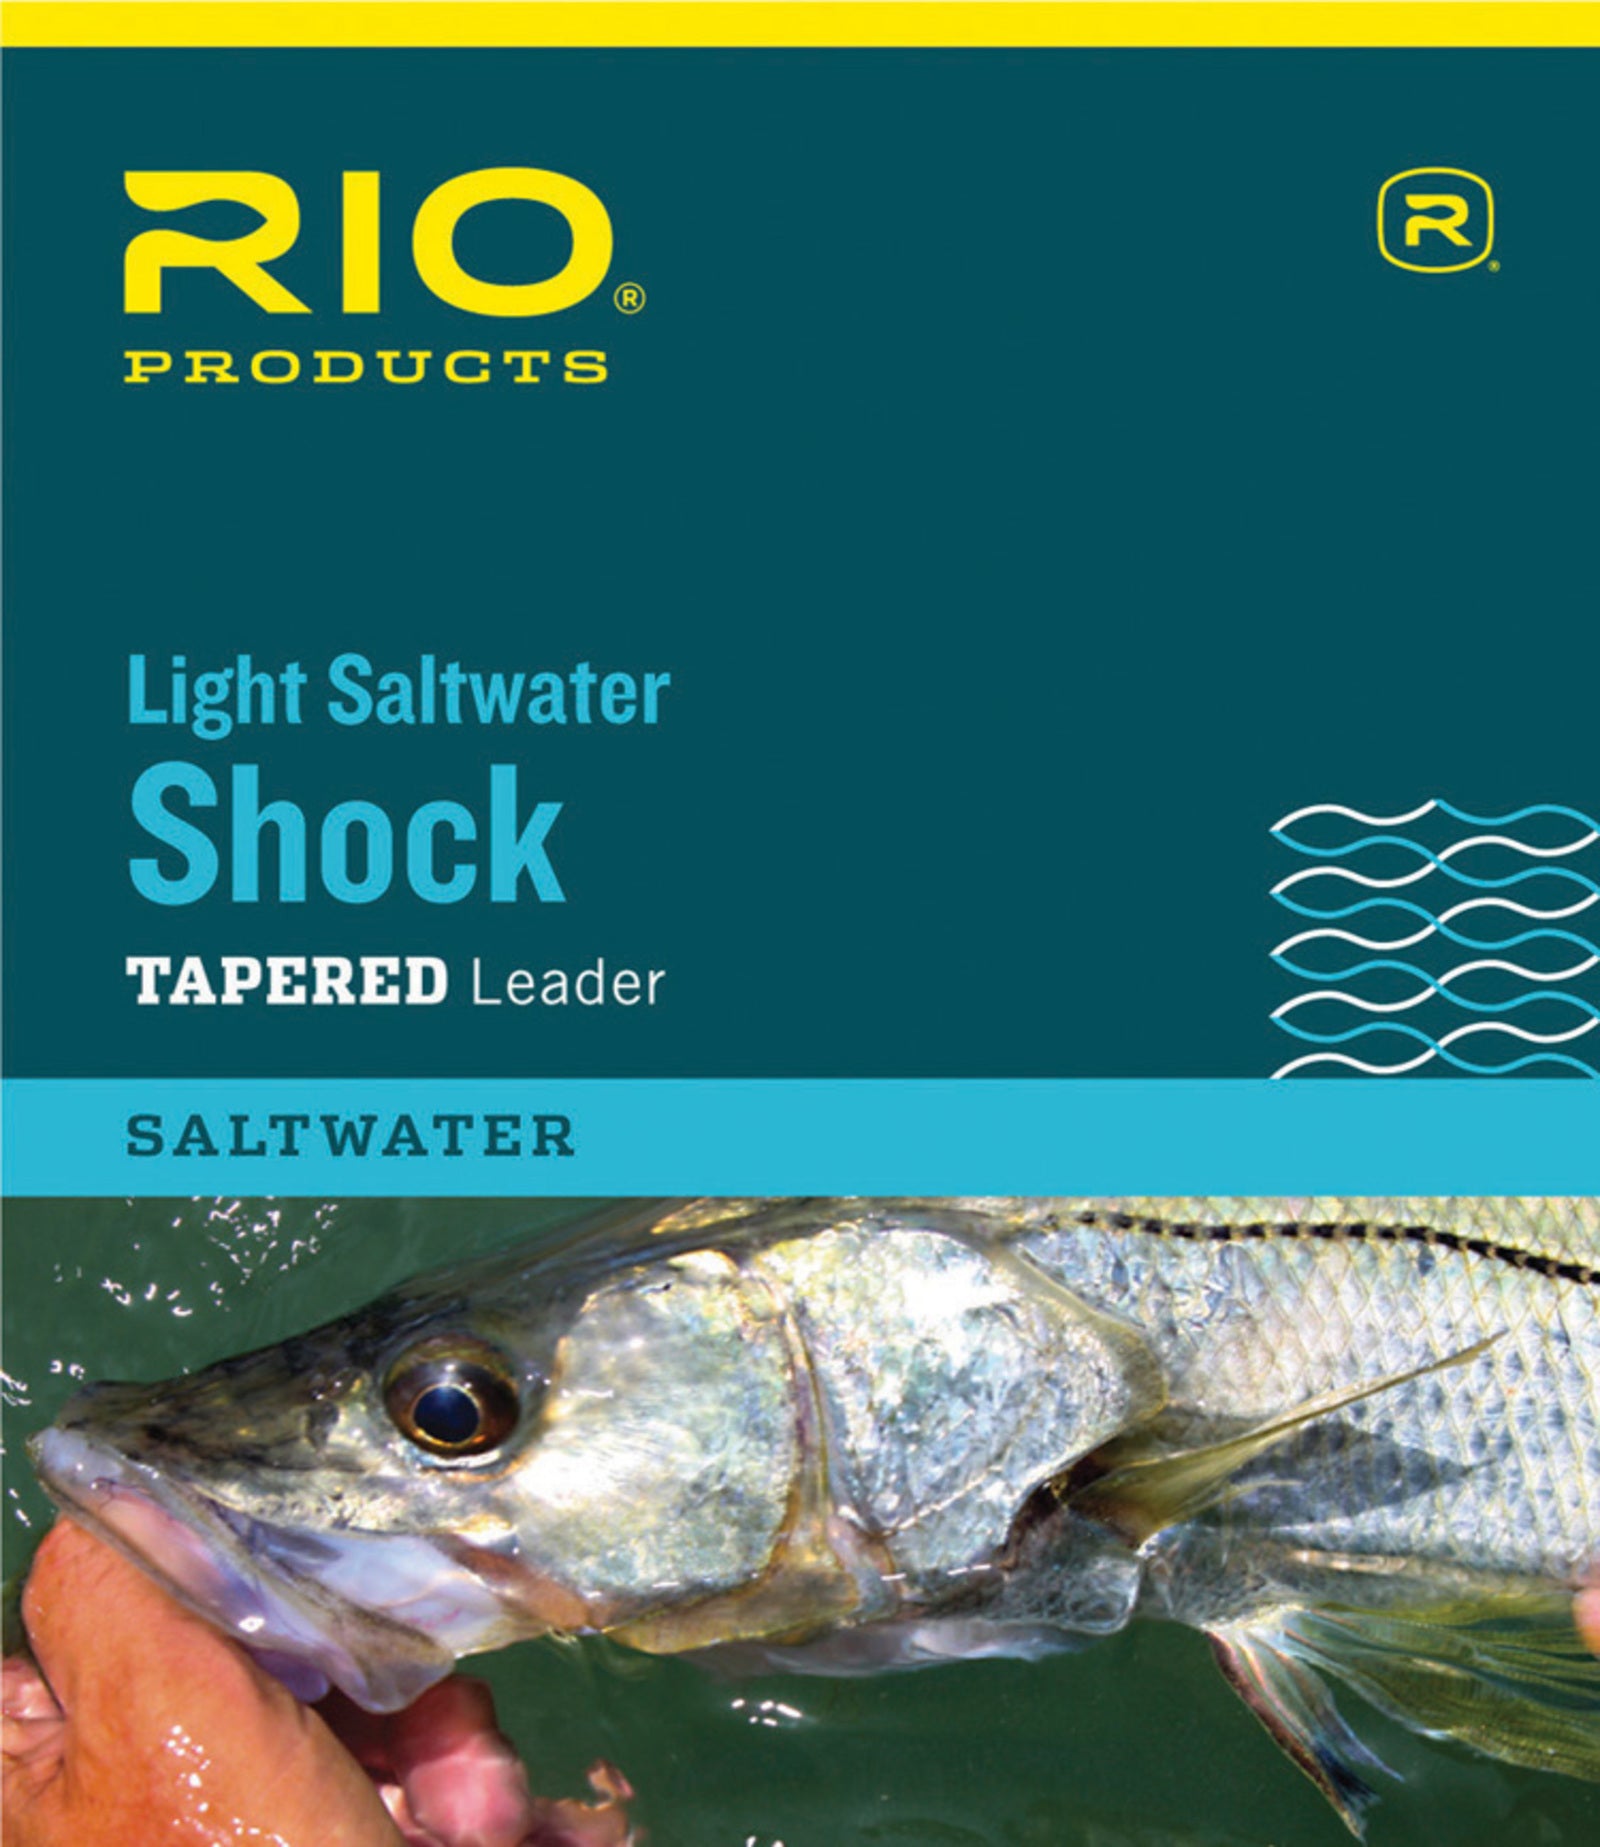 Rio Striped Bass Leader